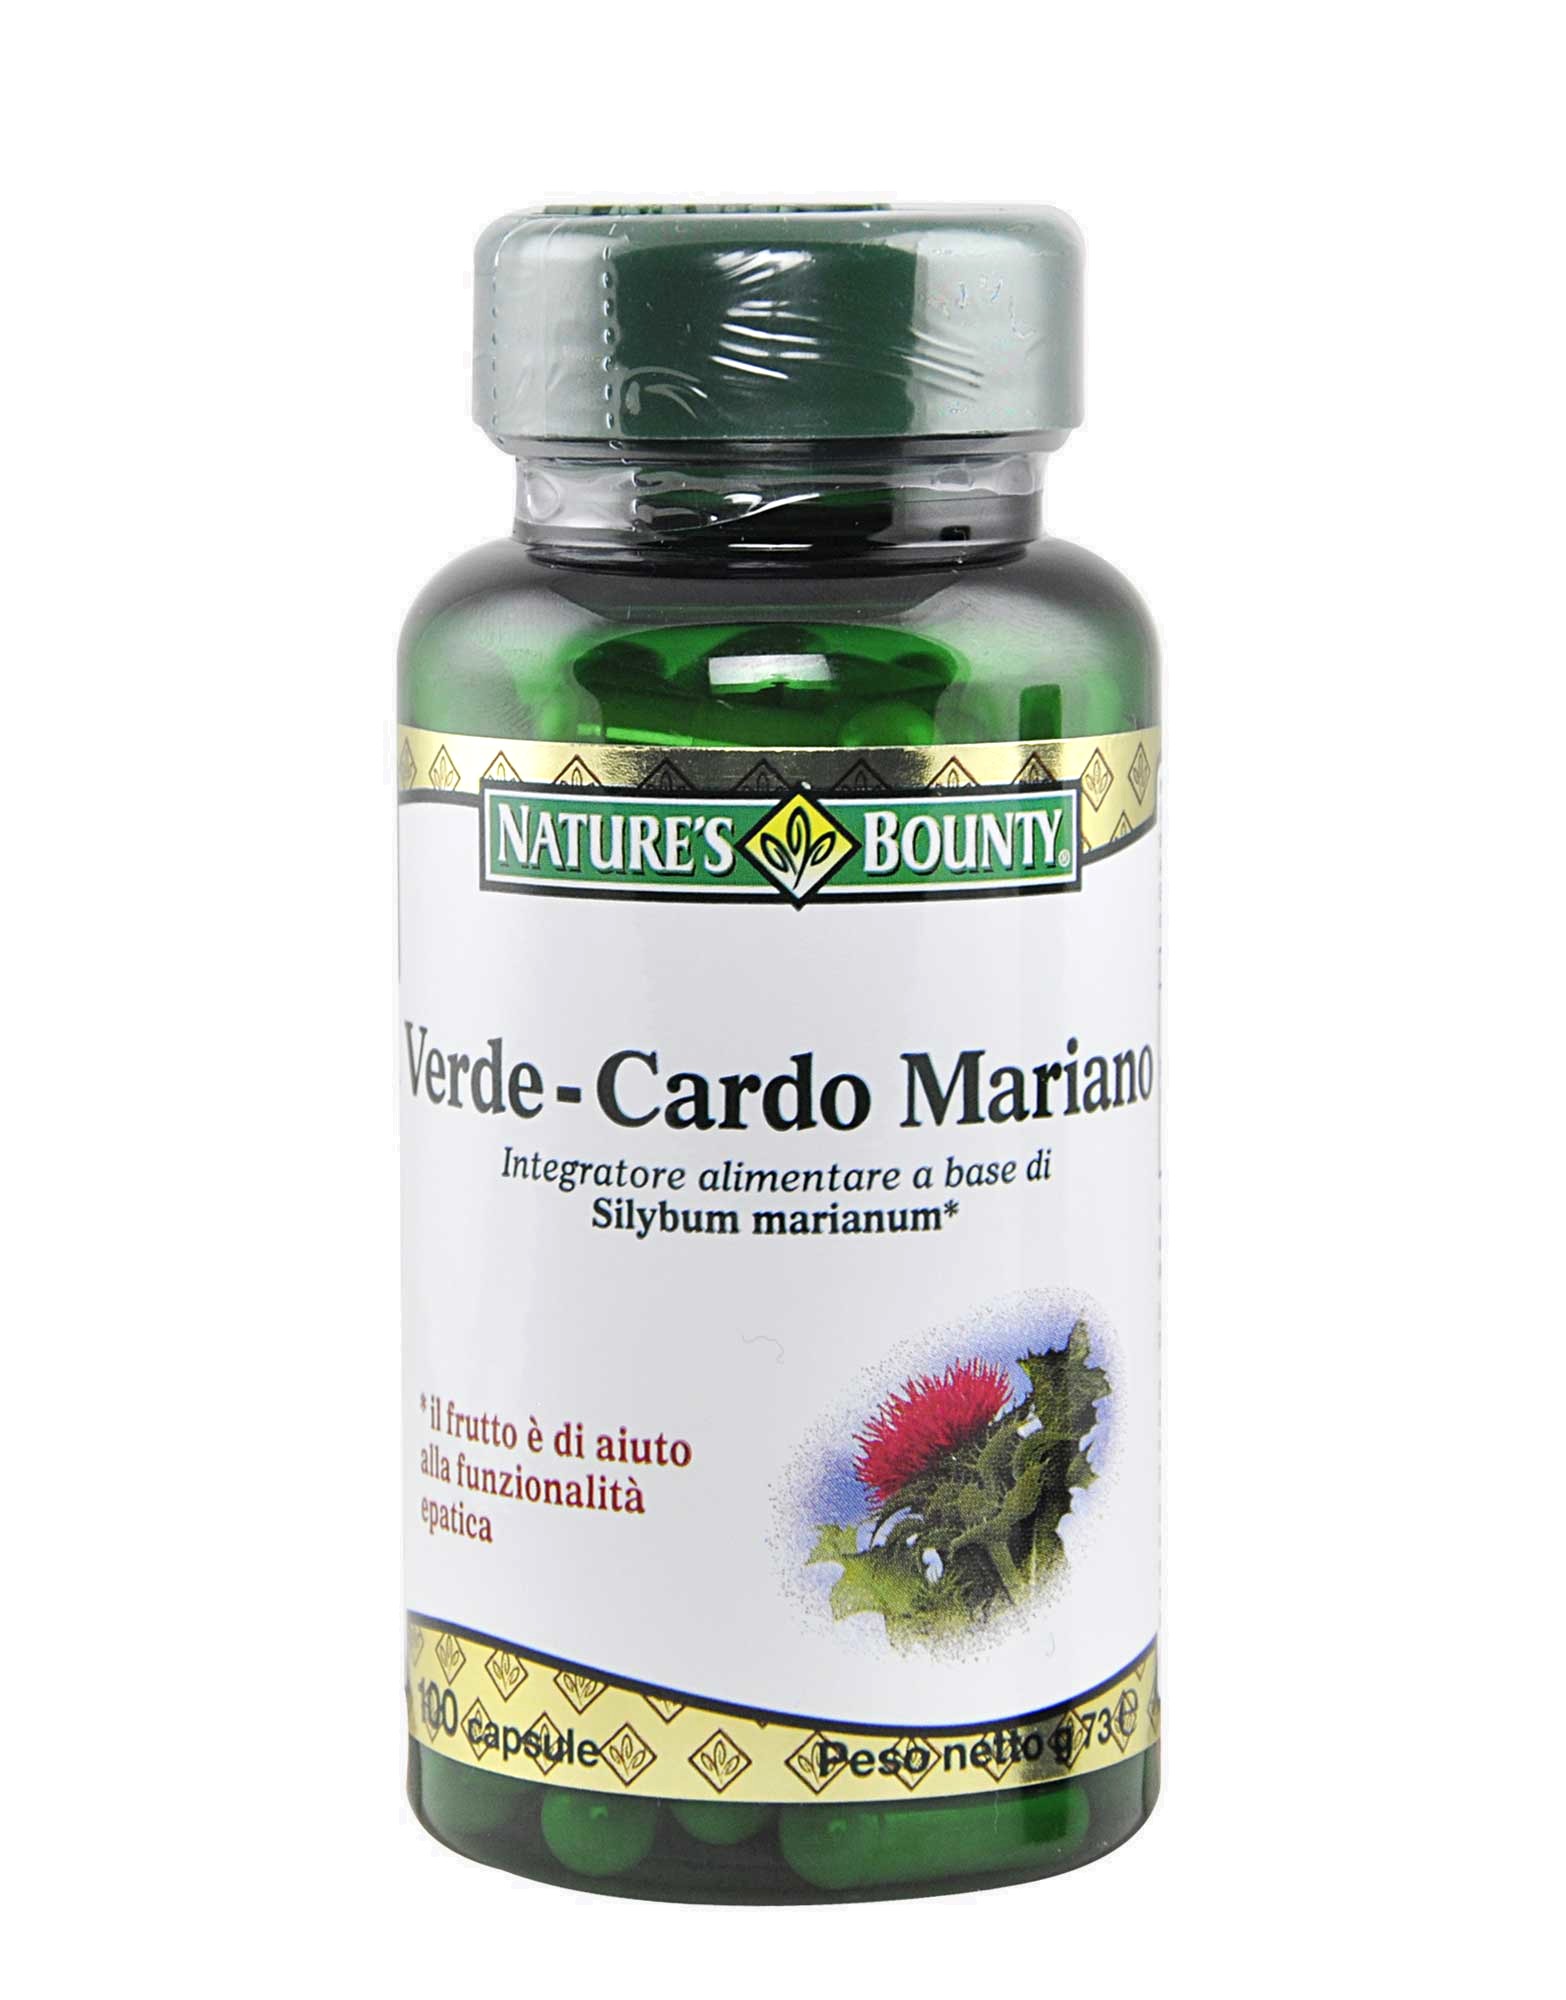 Verde-Cardo Mariano de Nature's bounty, 100 cápsulas 